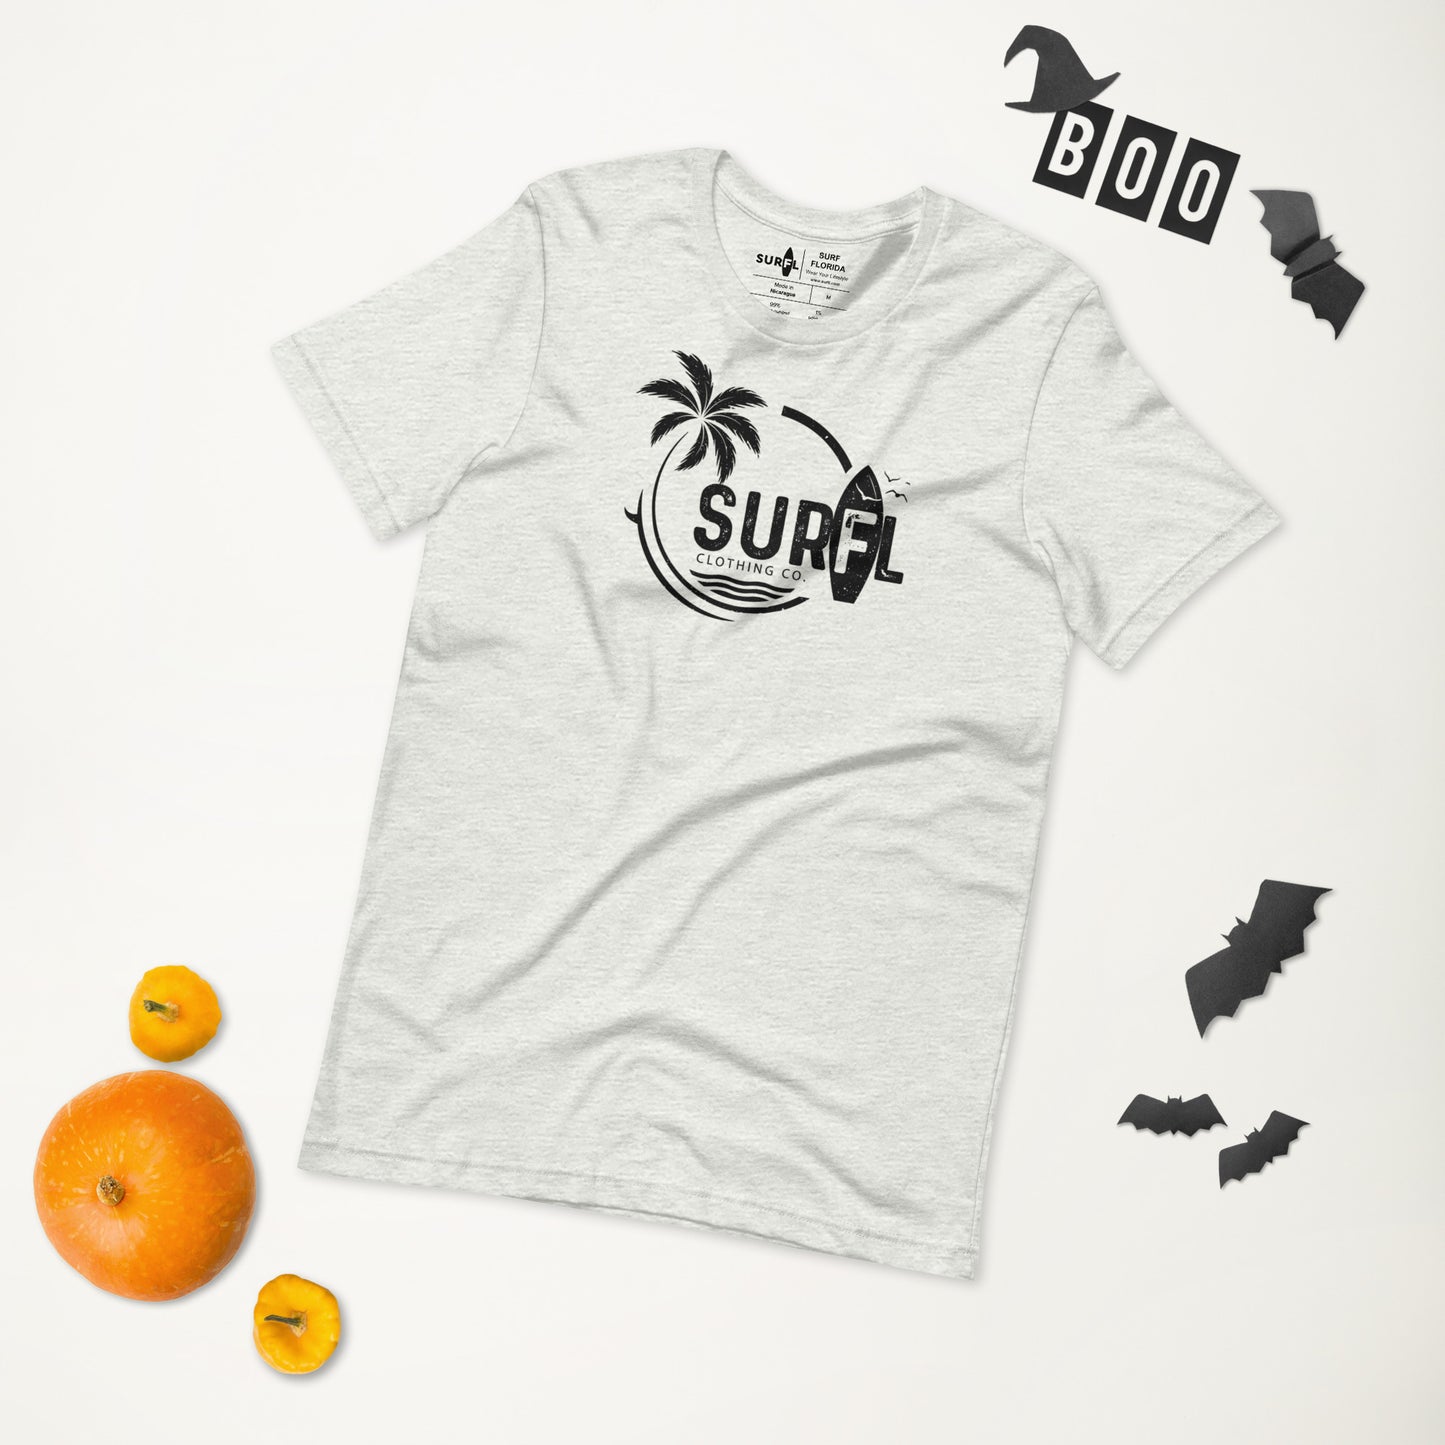 Men's Round Palm Surf Florida T-Shirt